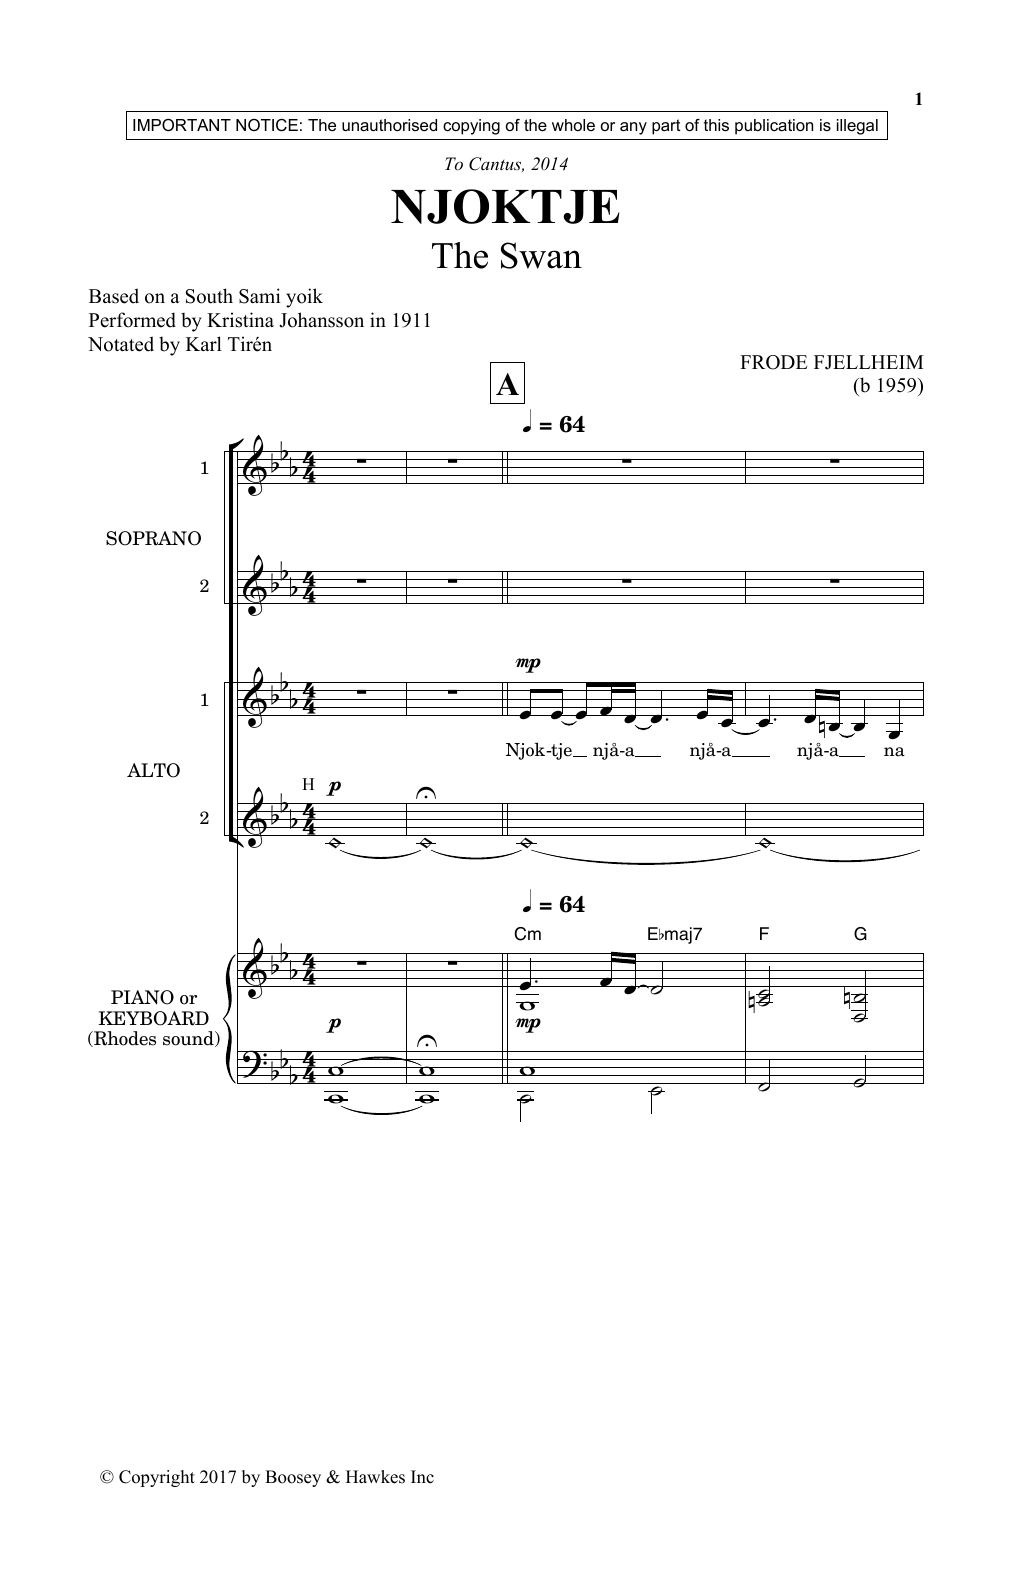 Frode Fjellheim Njoktje Sheet Music Notes & Chords for SSA - Download or Print PDF